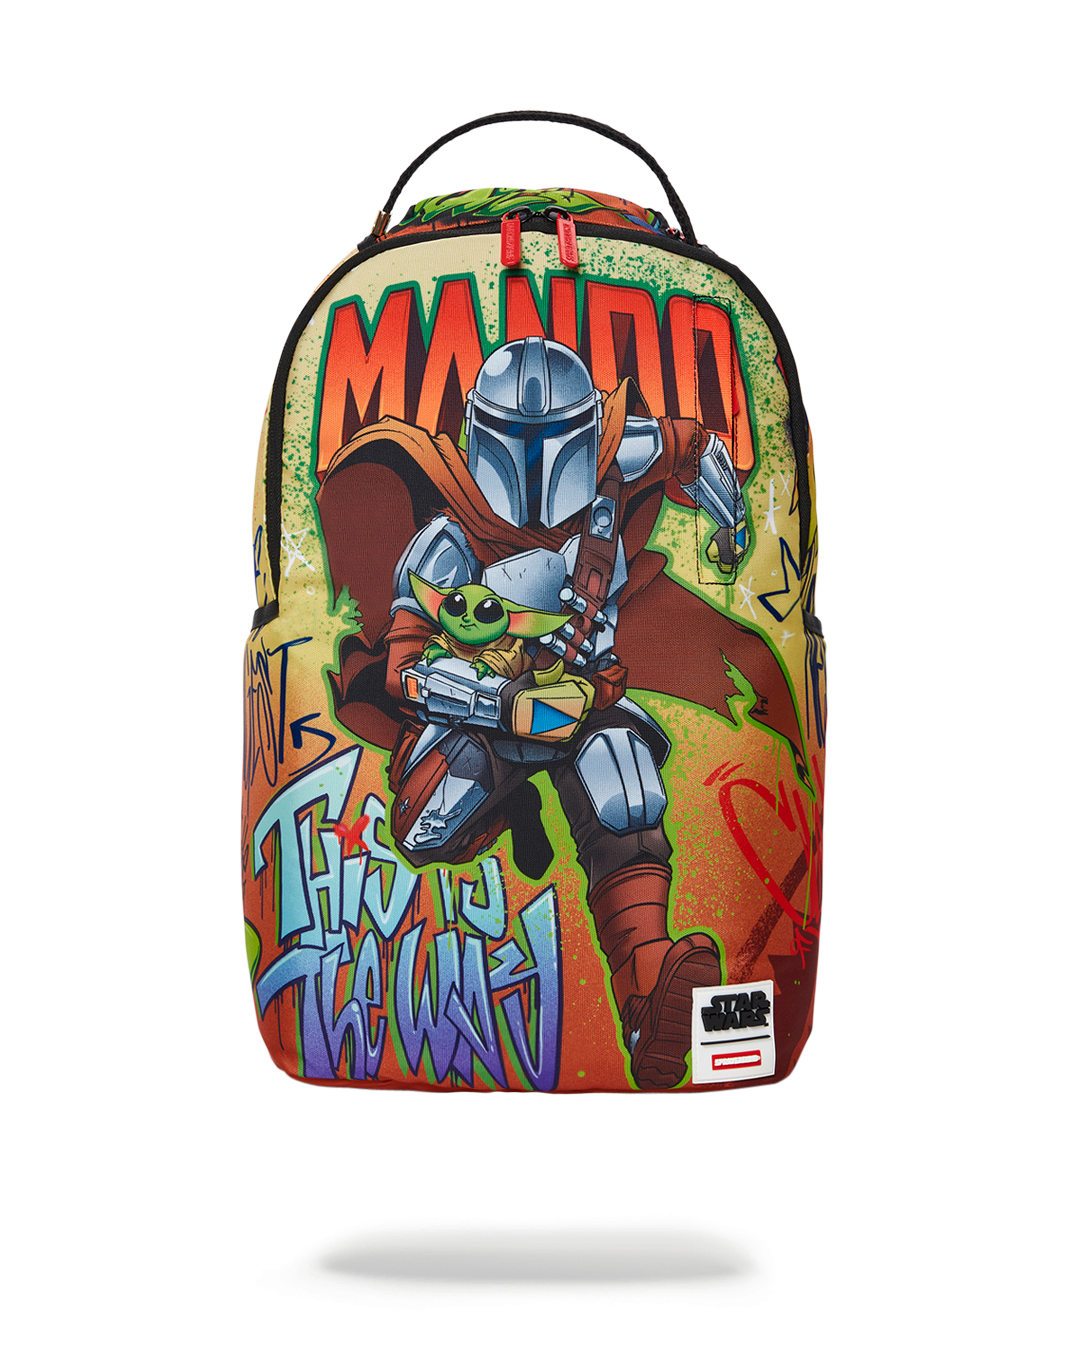 Rebelscum.com: New Star Wars Inspired Backpacks Coming From Sprayground